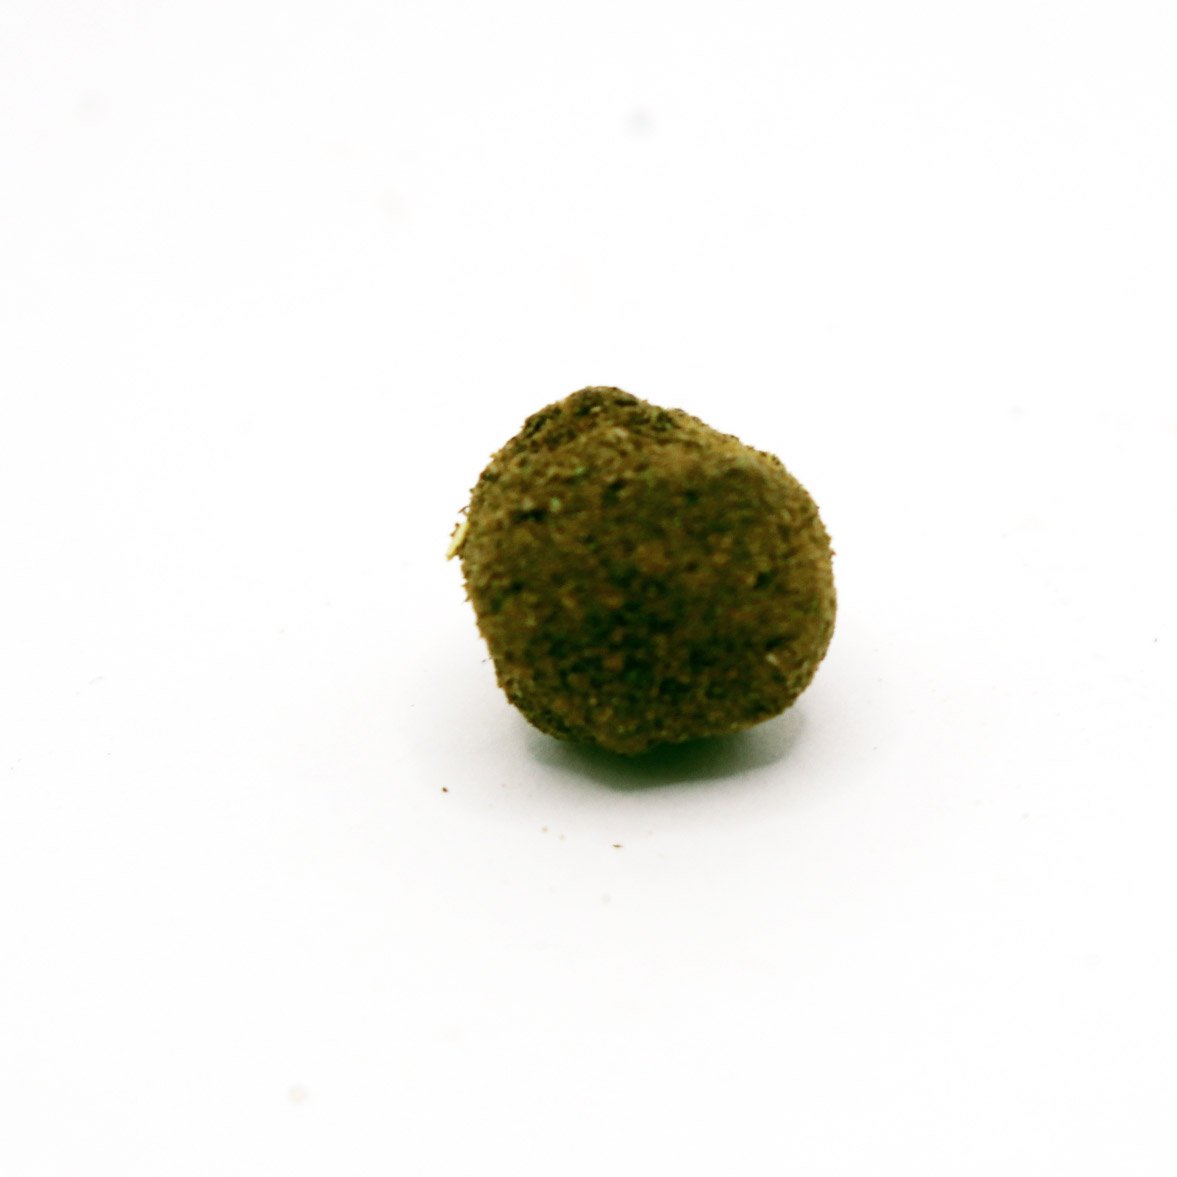 Cannaballz (moonrocks) - 1 gram